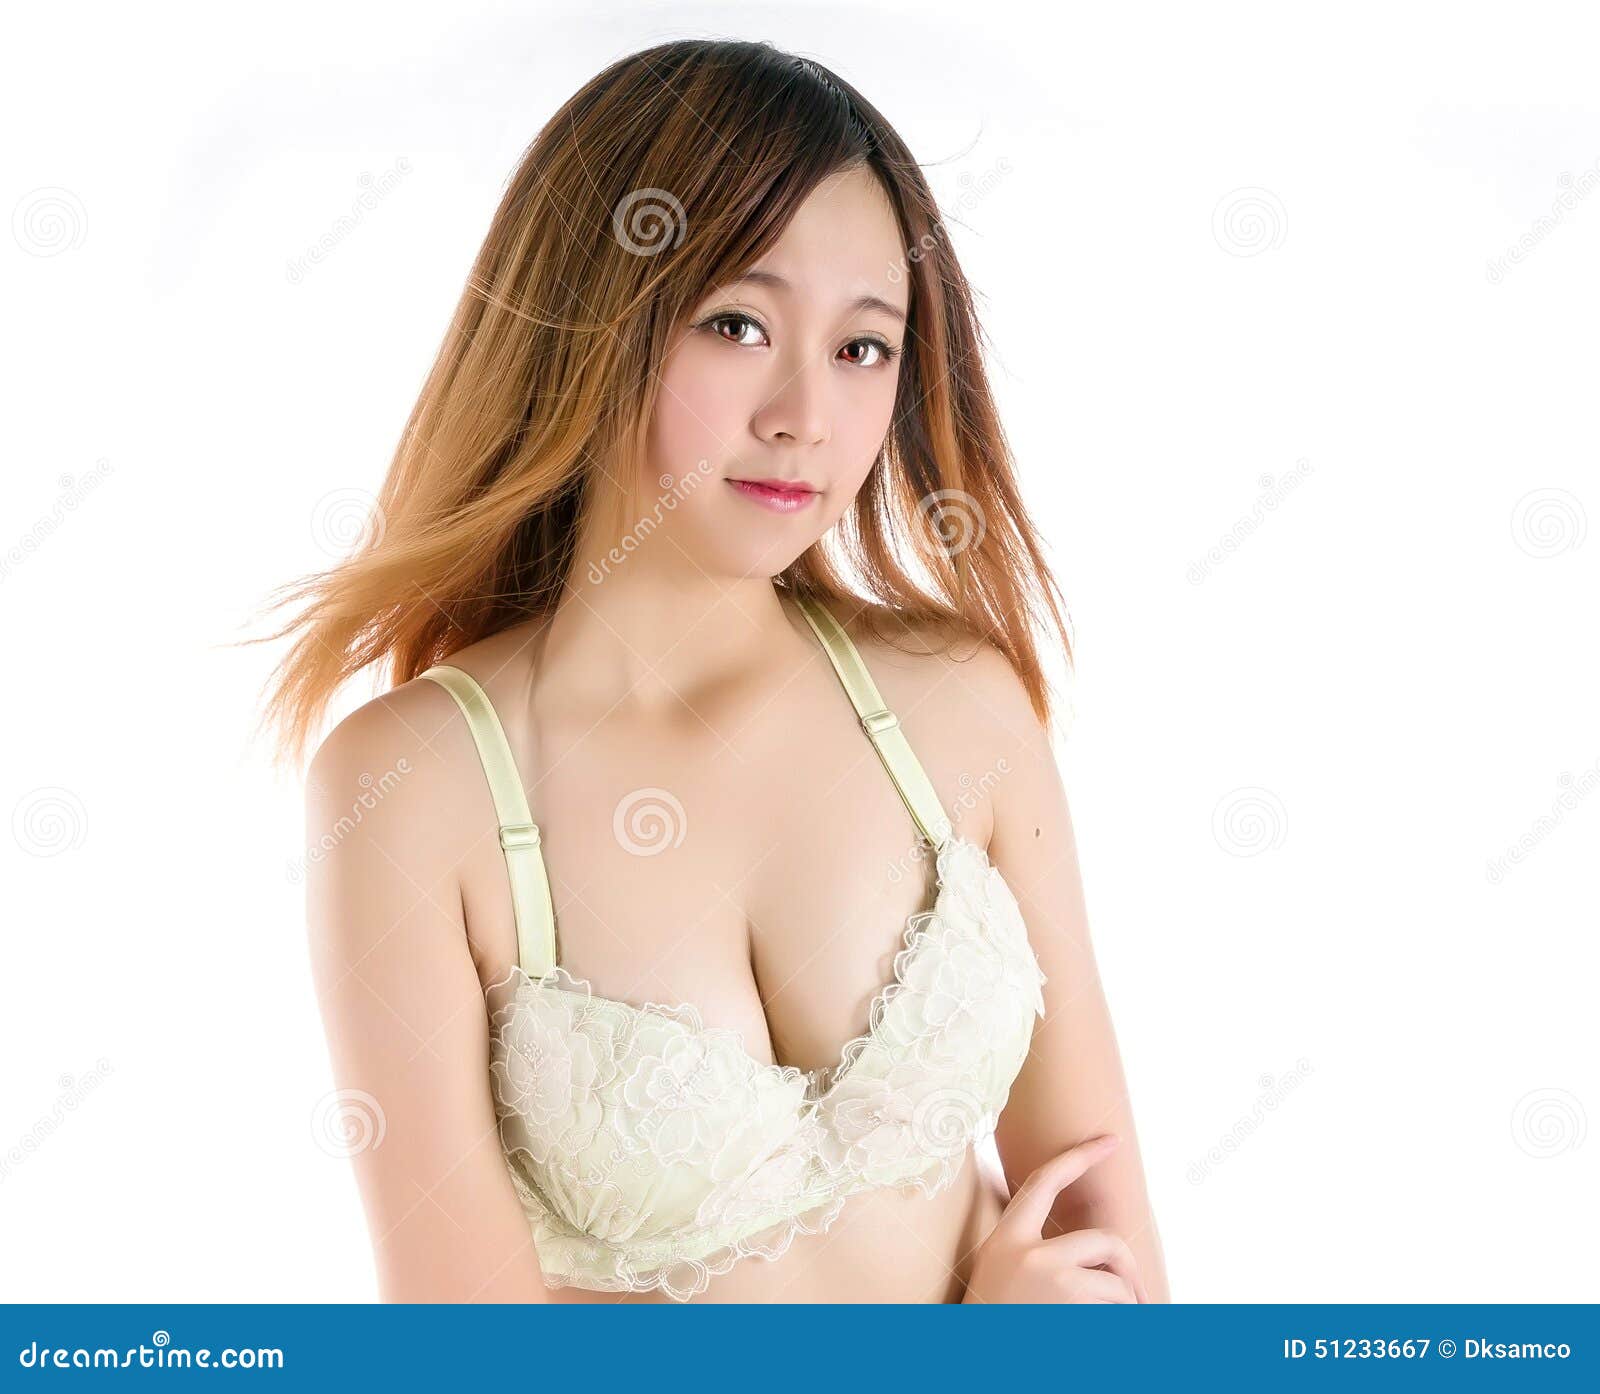 ben schempp recommends sexy asian girls in lingerie pic